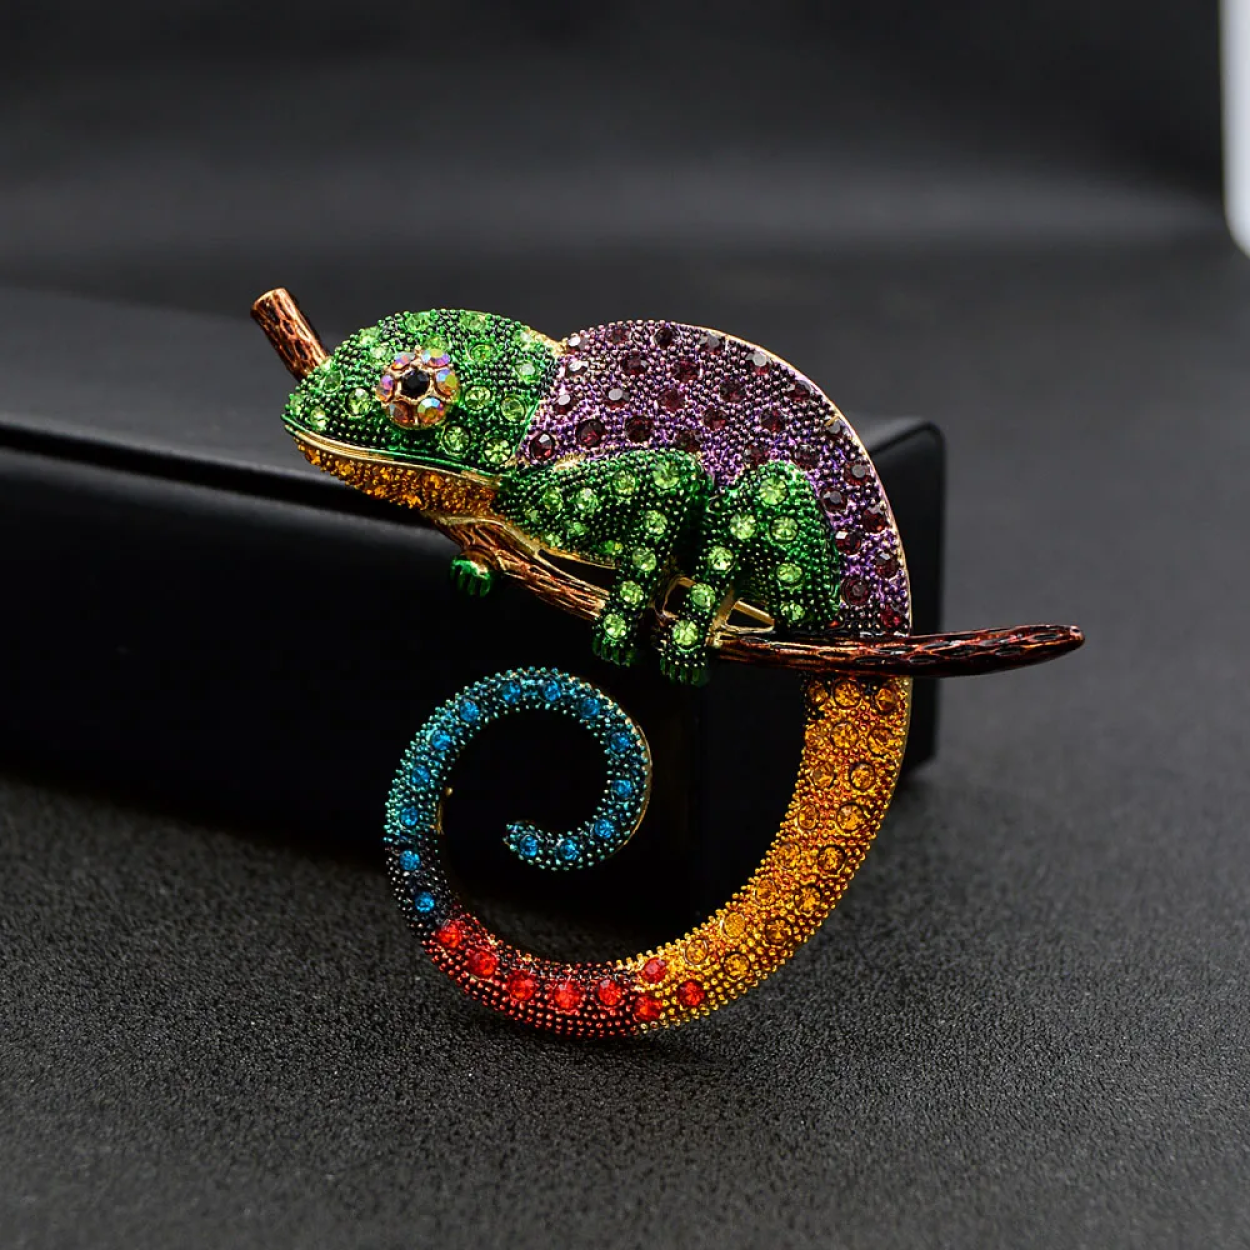 2: Colorful Gemstone Chameleon Lapel Pin